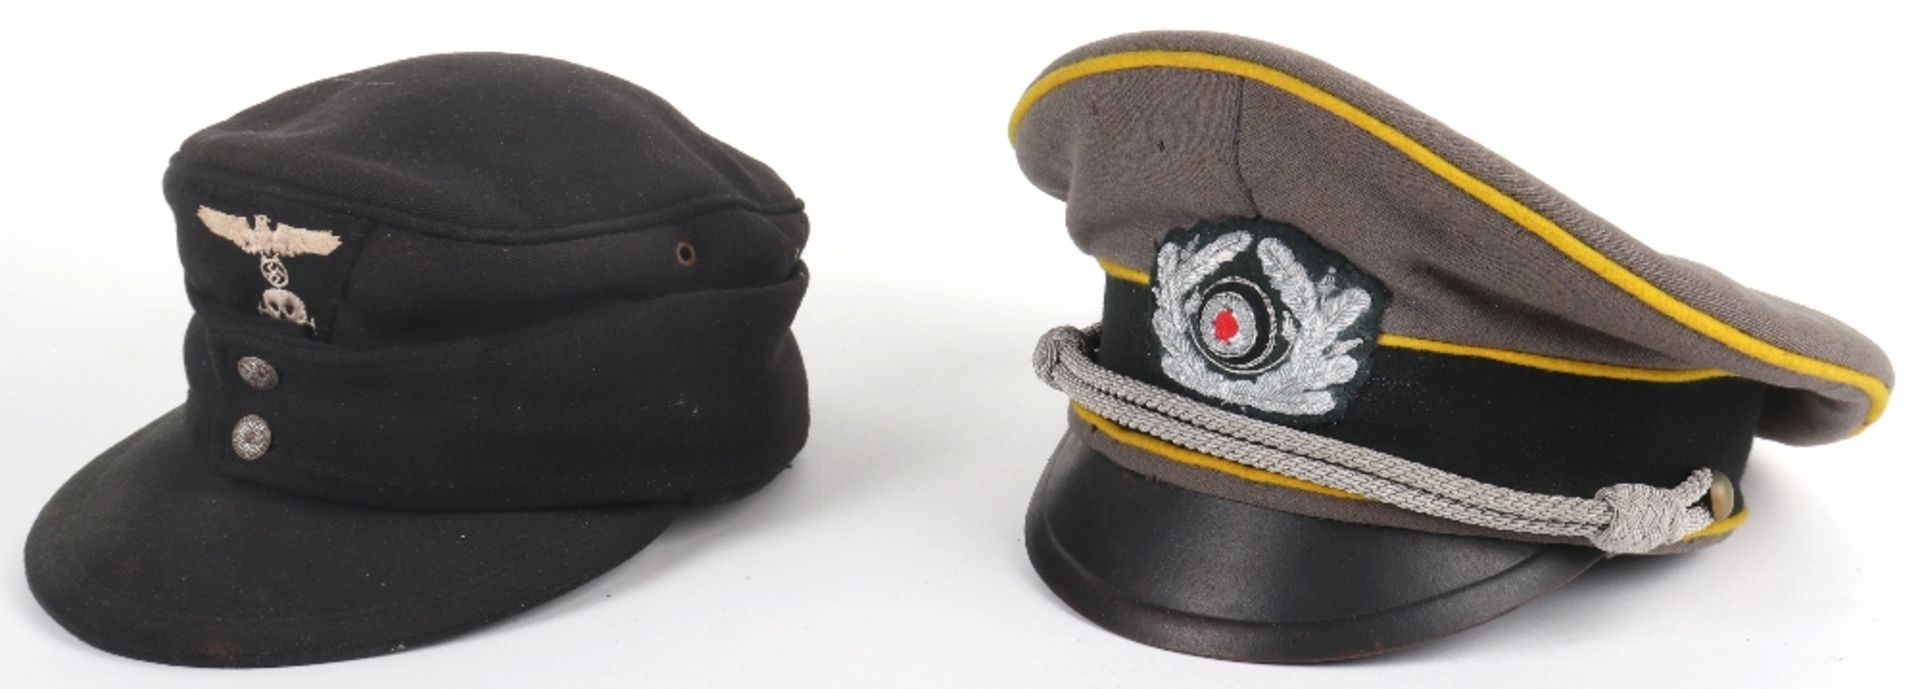 WW2 Style German Hats - Image 2 of 22